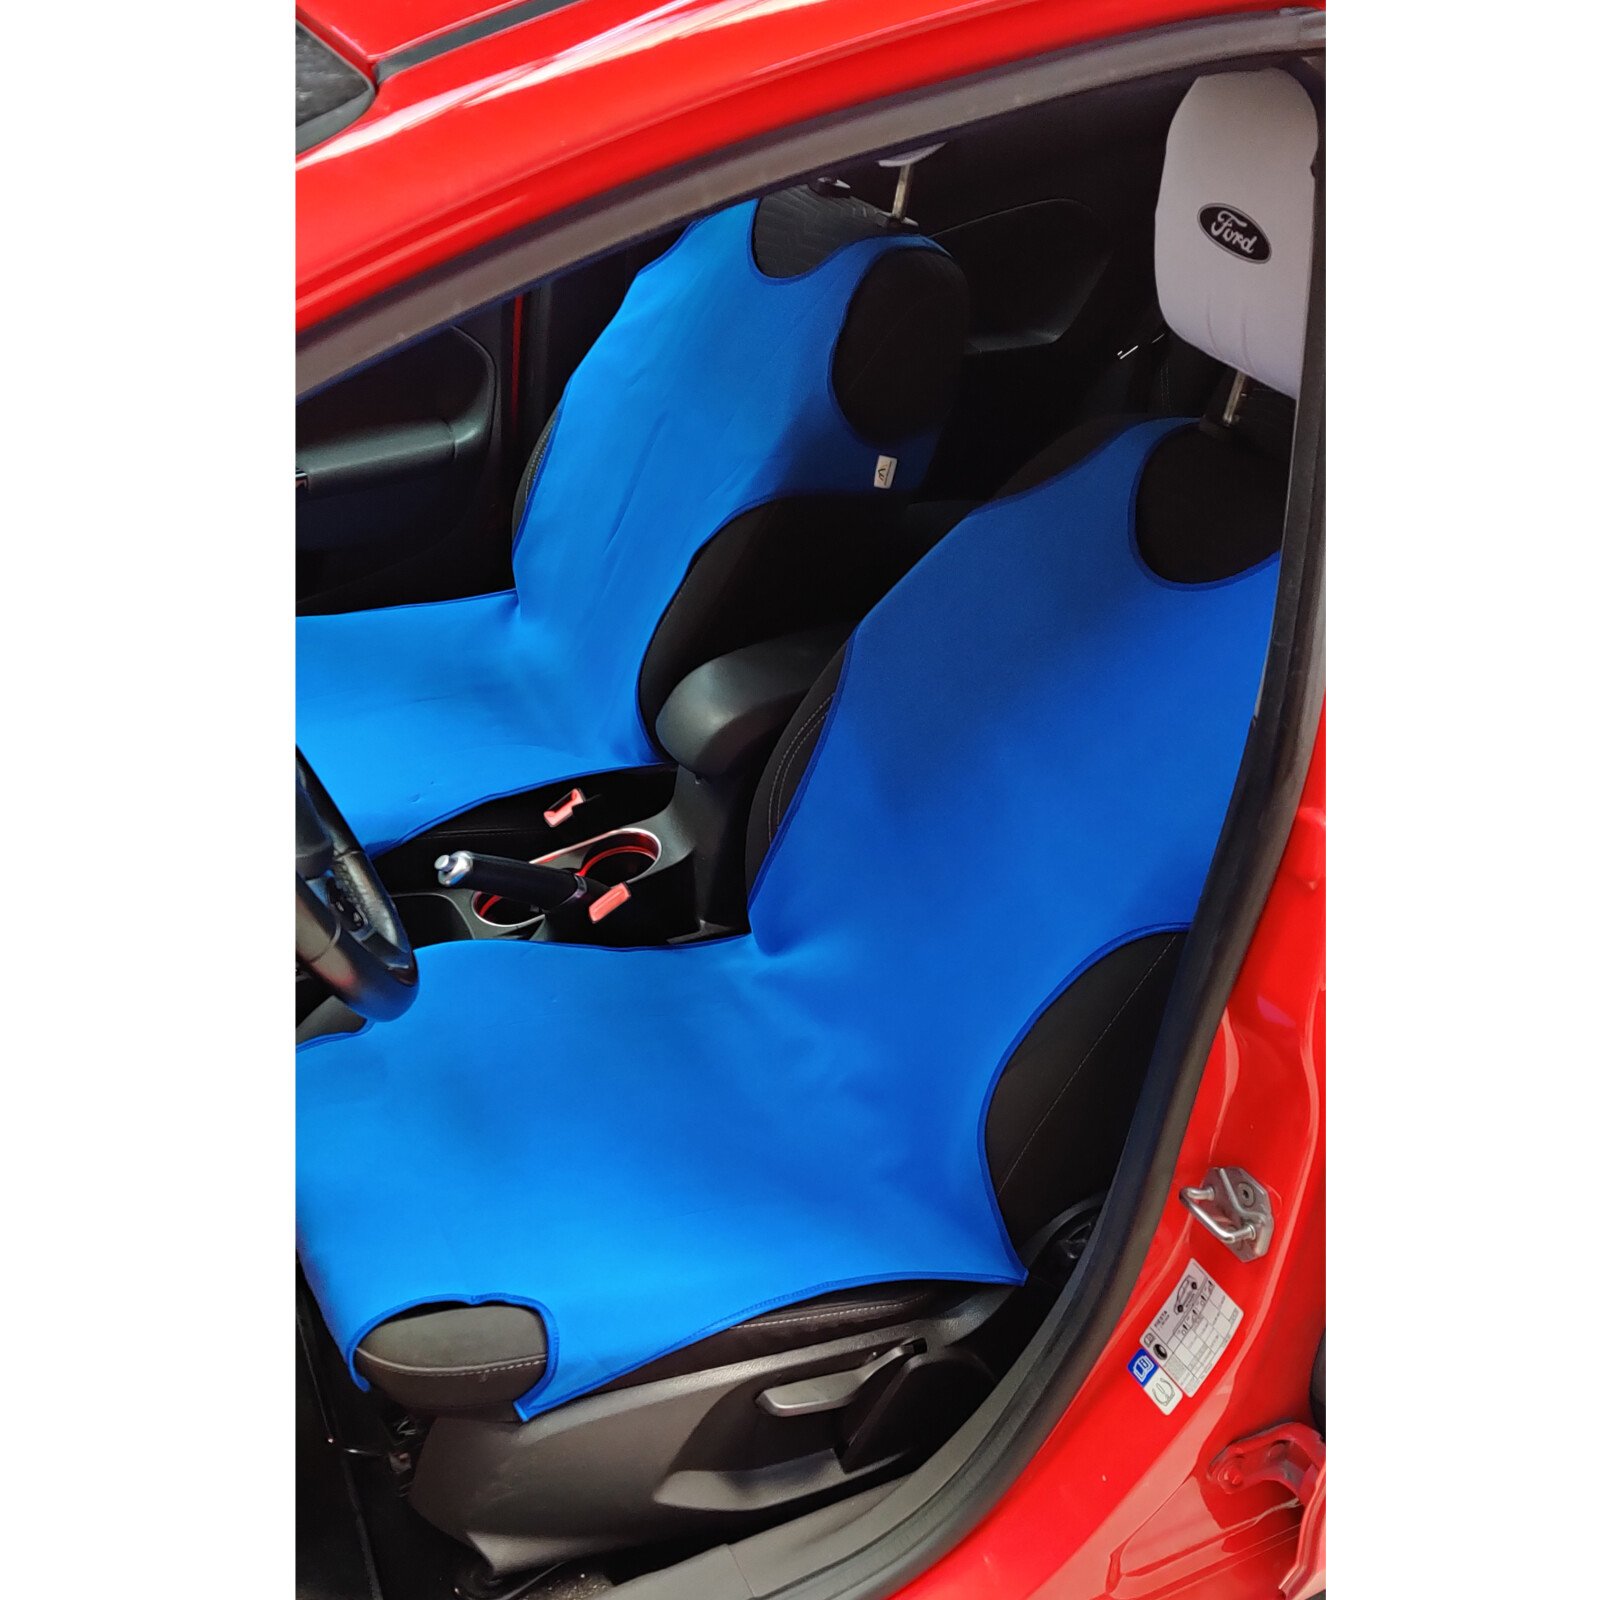 Cridem Sport T-shirt front seat covers 2pcs - Blue thumb